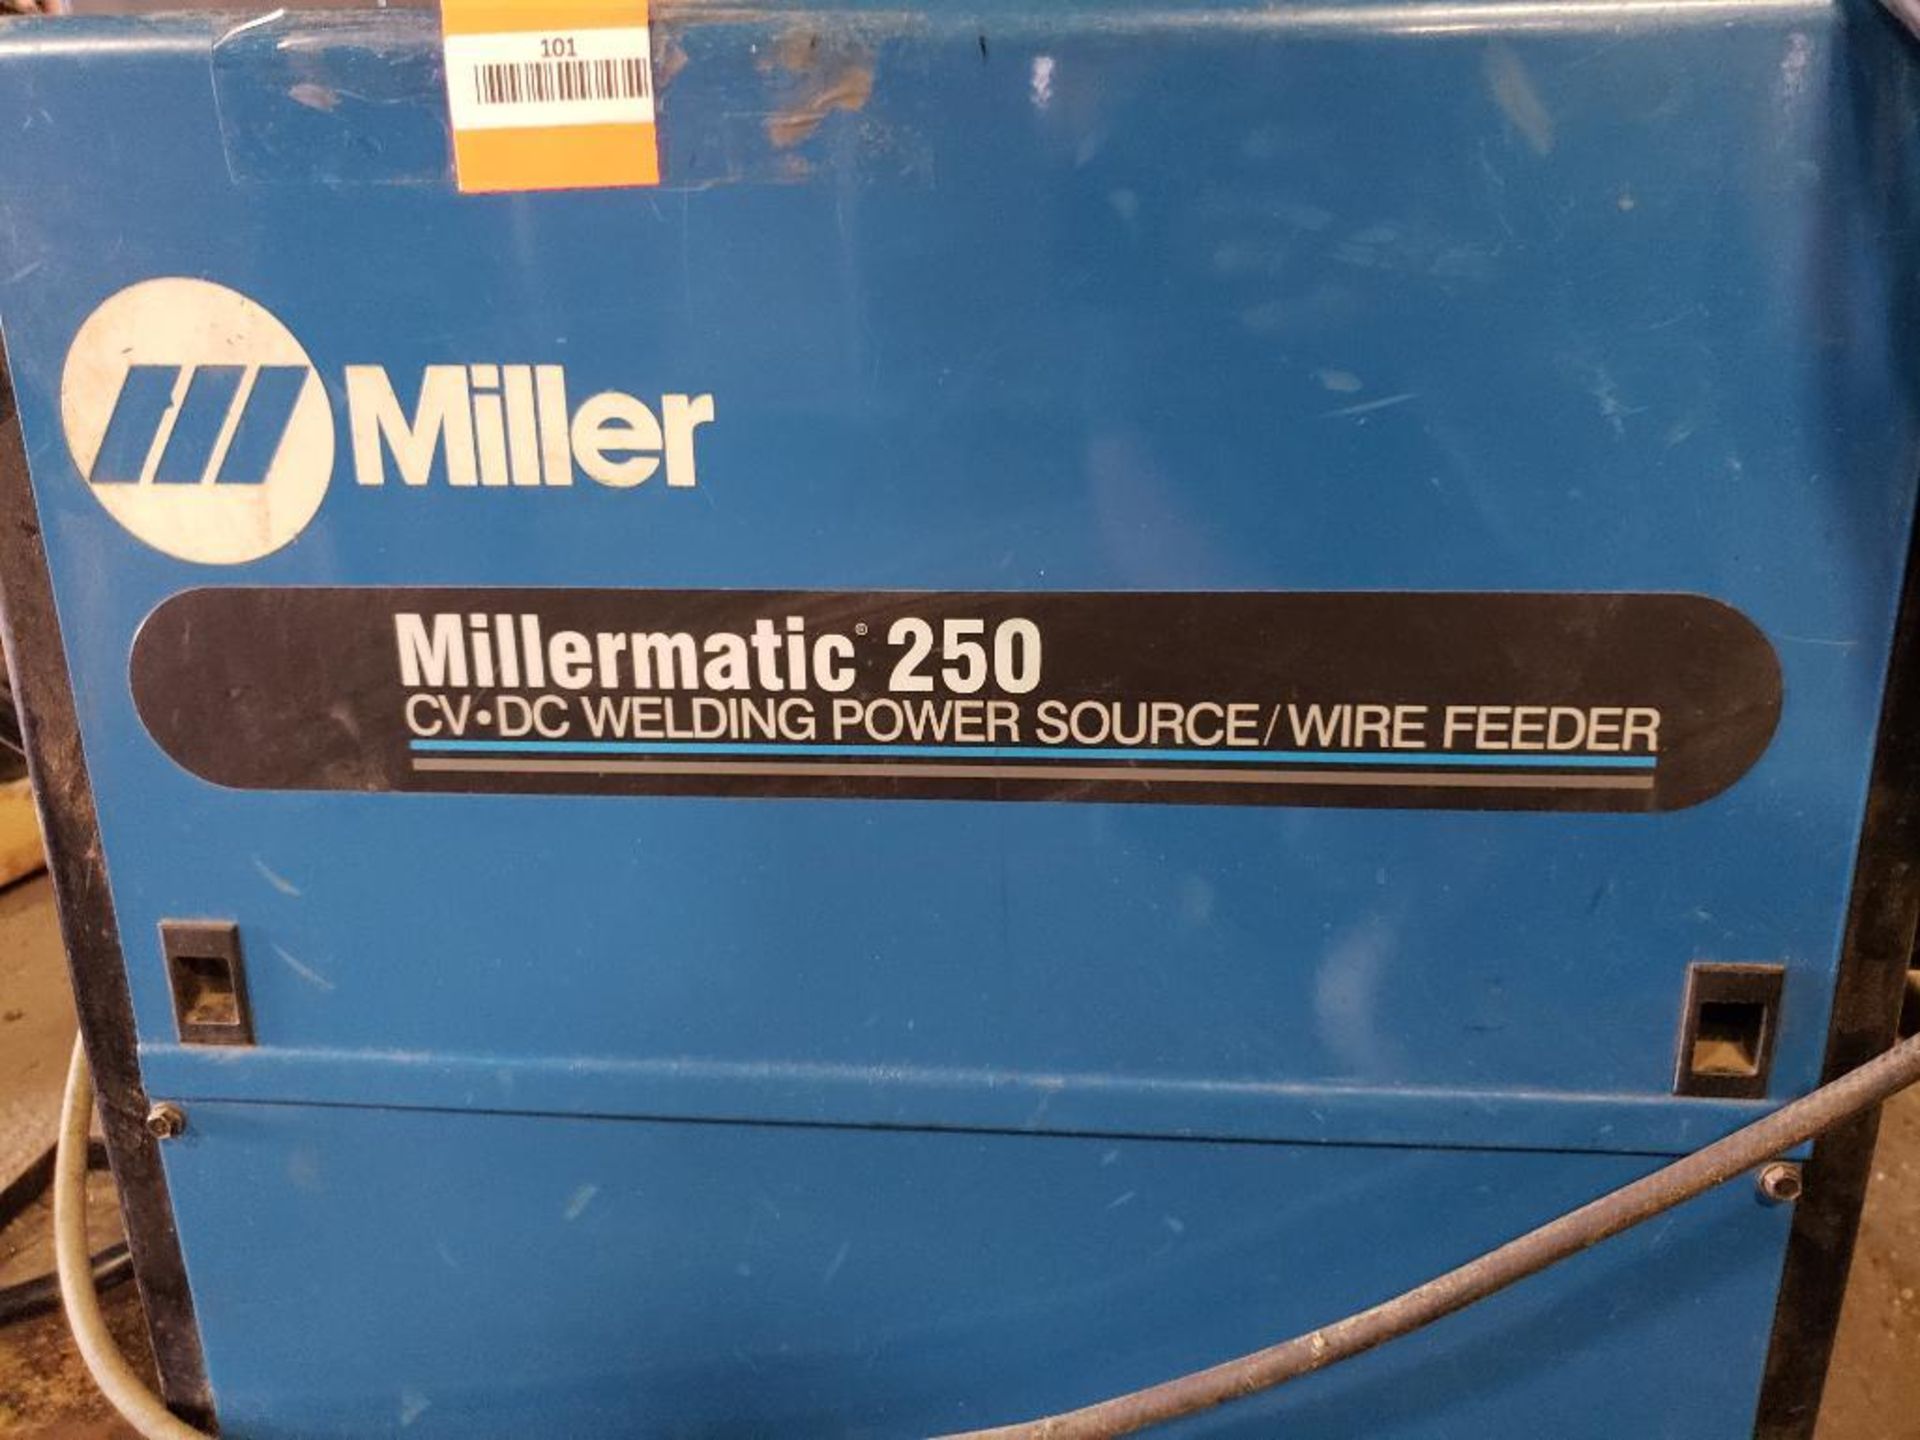 Miller Millermatic 250 CV - DC welding power source / wire feeder. 903291. - Image 4 of 8